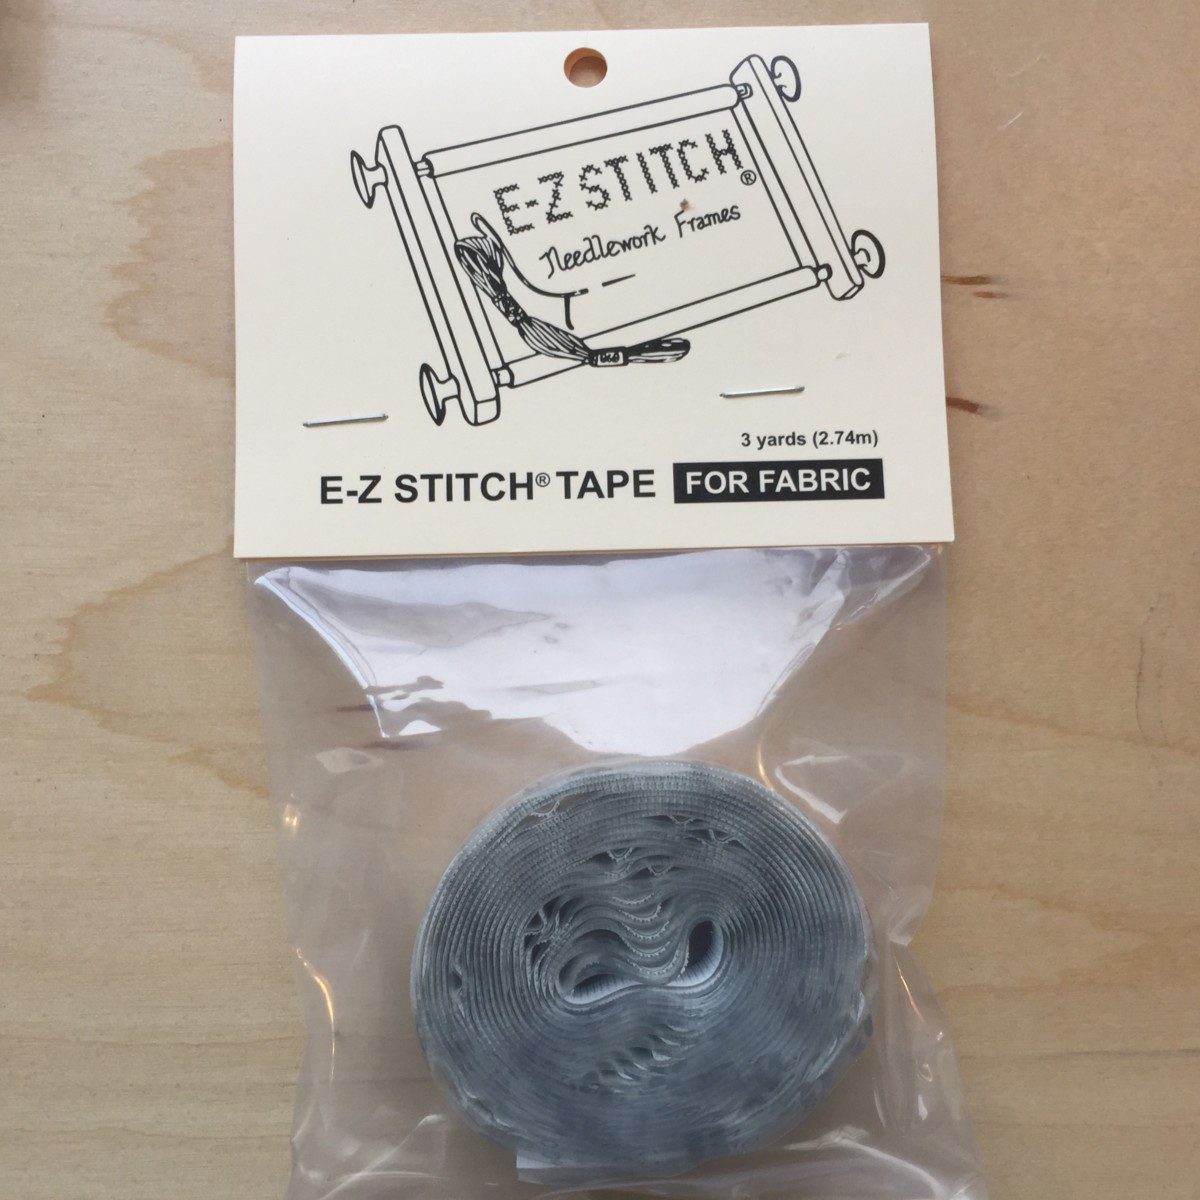 E-Z Stitch No Baste tape for Fabric or Canvas